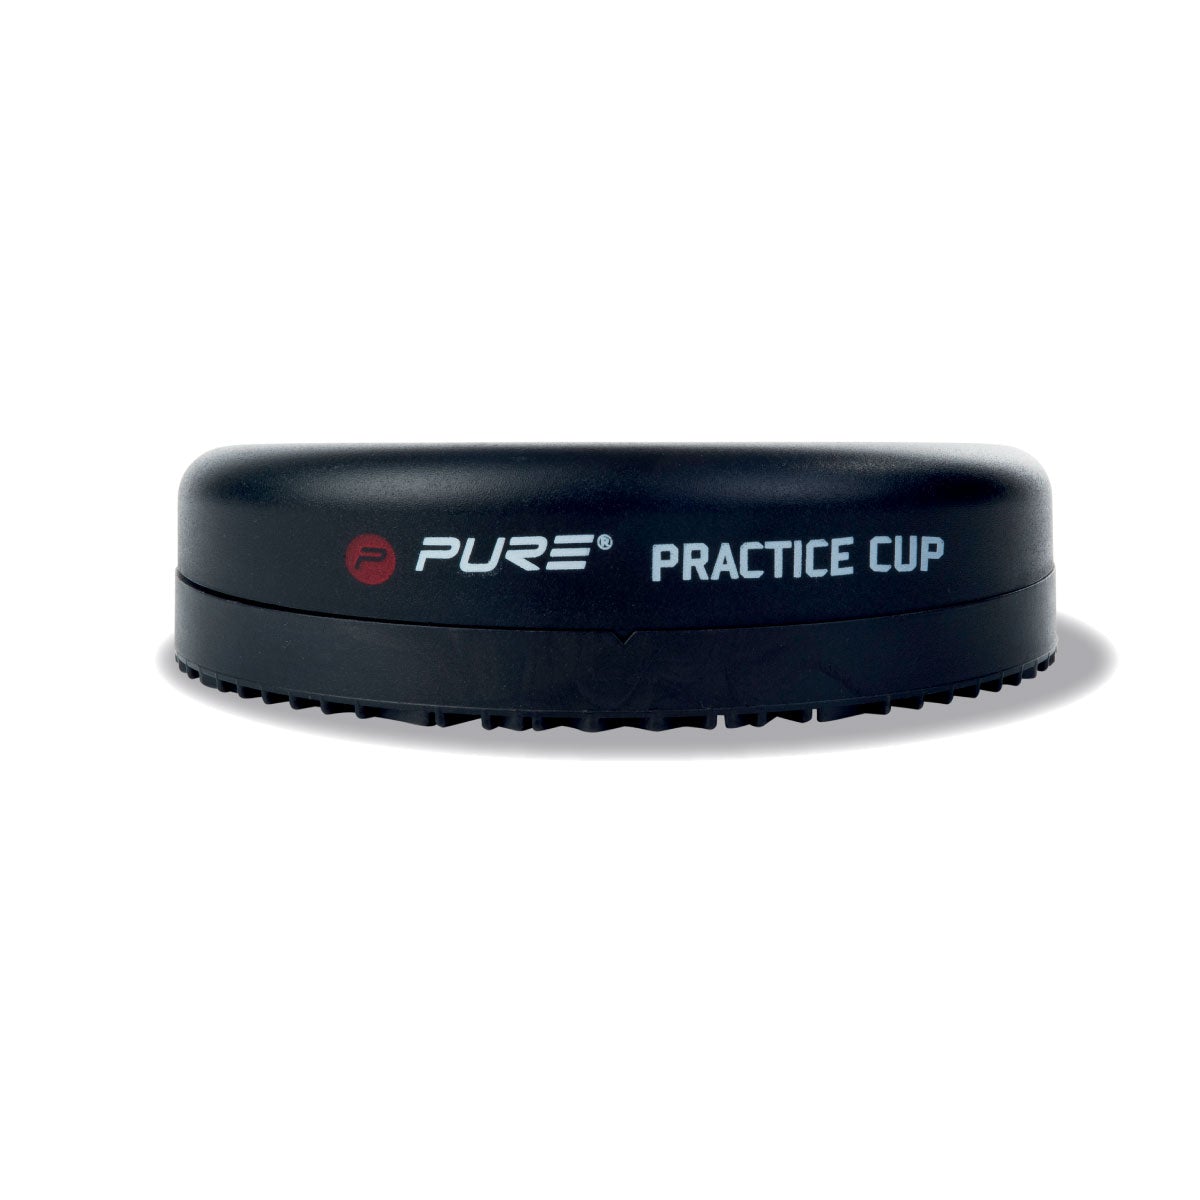 Pure 2 improve practice cup